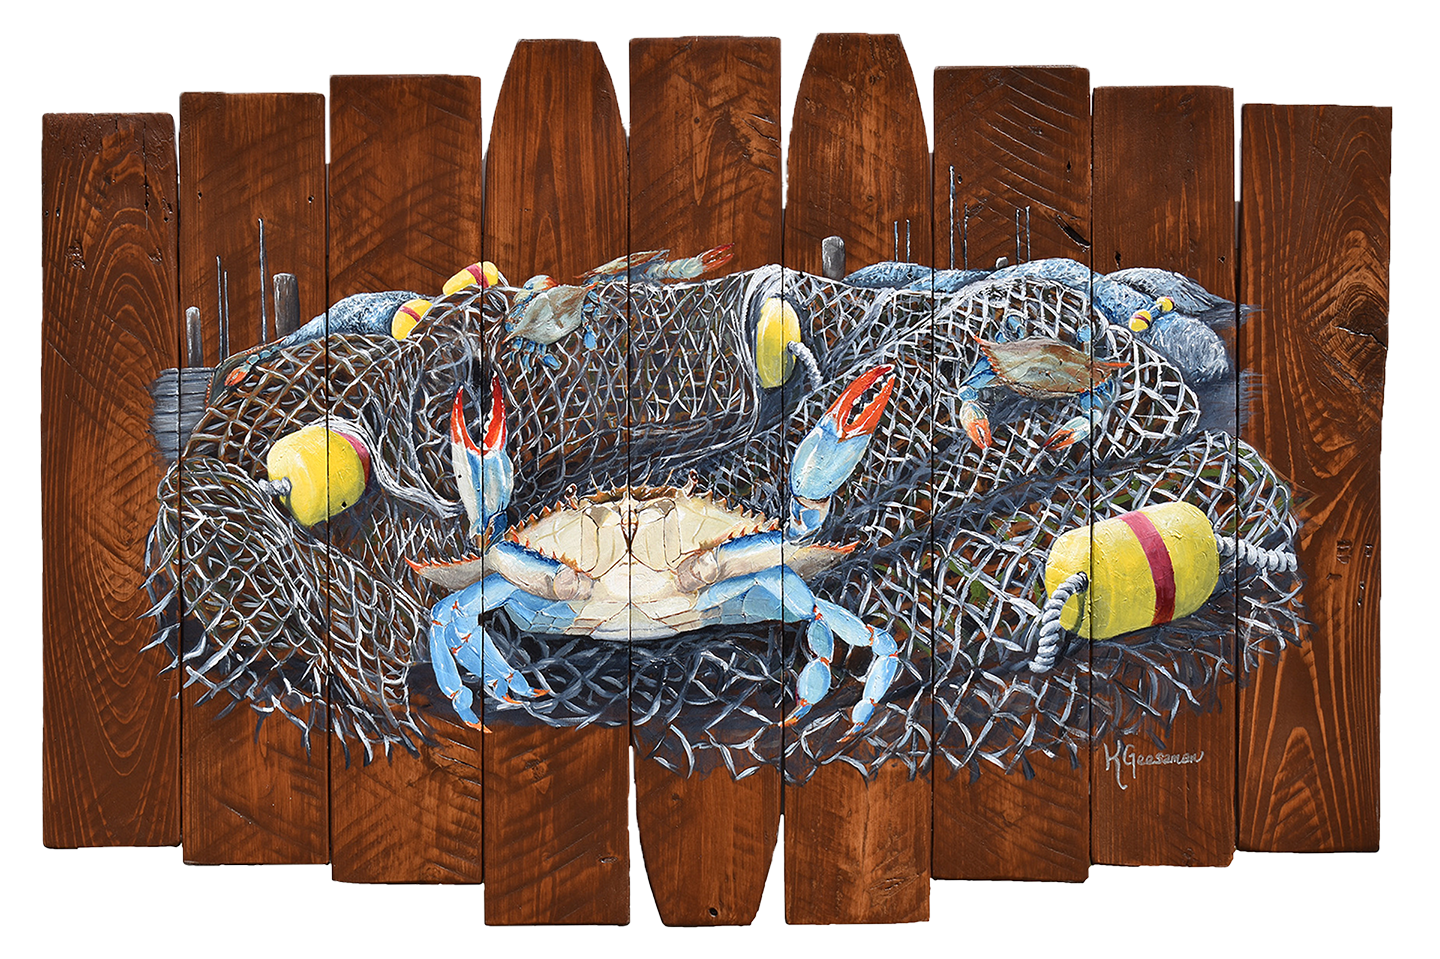 Crab Season - ORIGINAL PAINTING